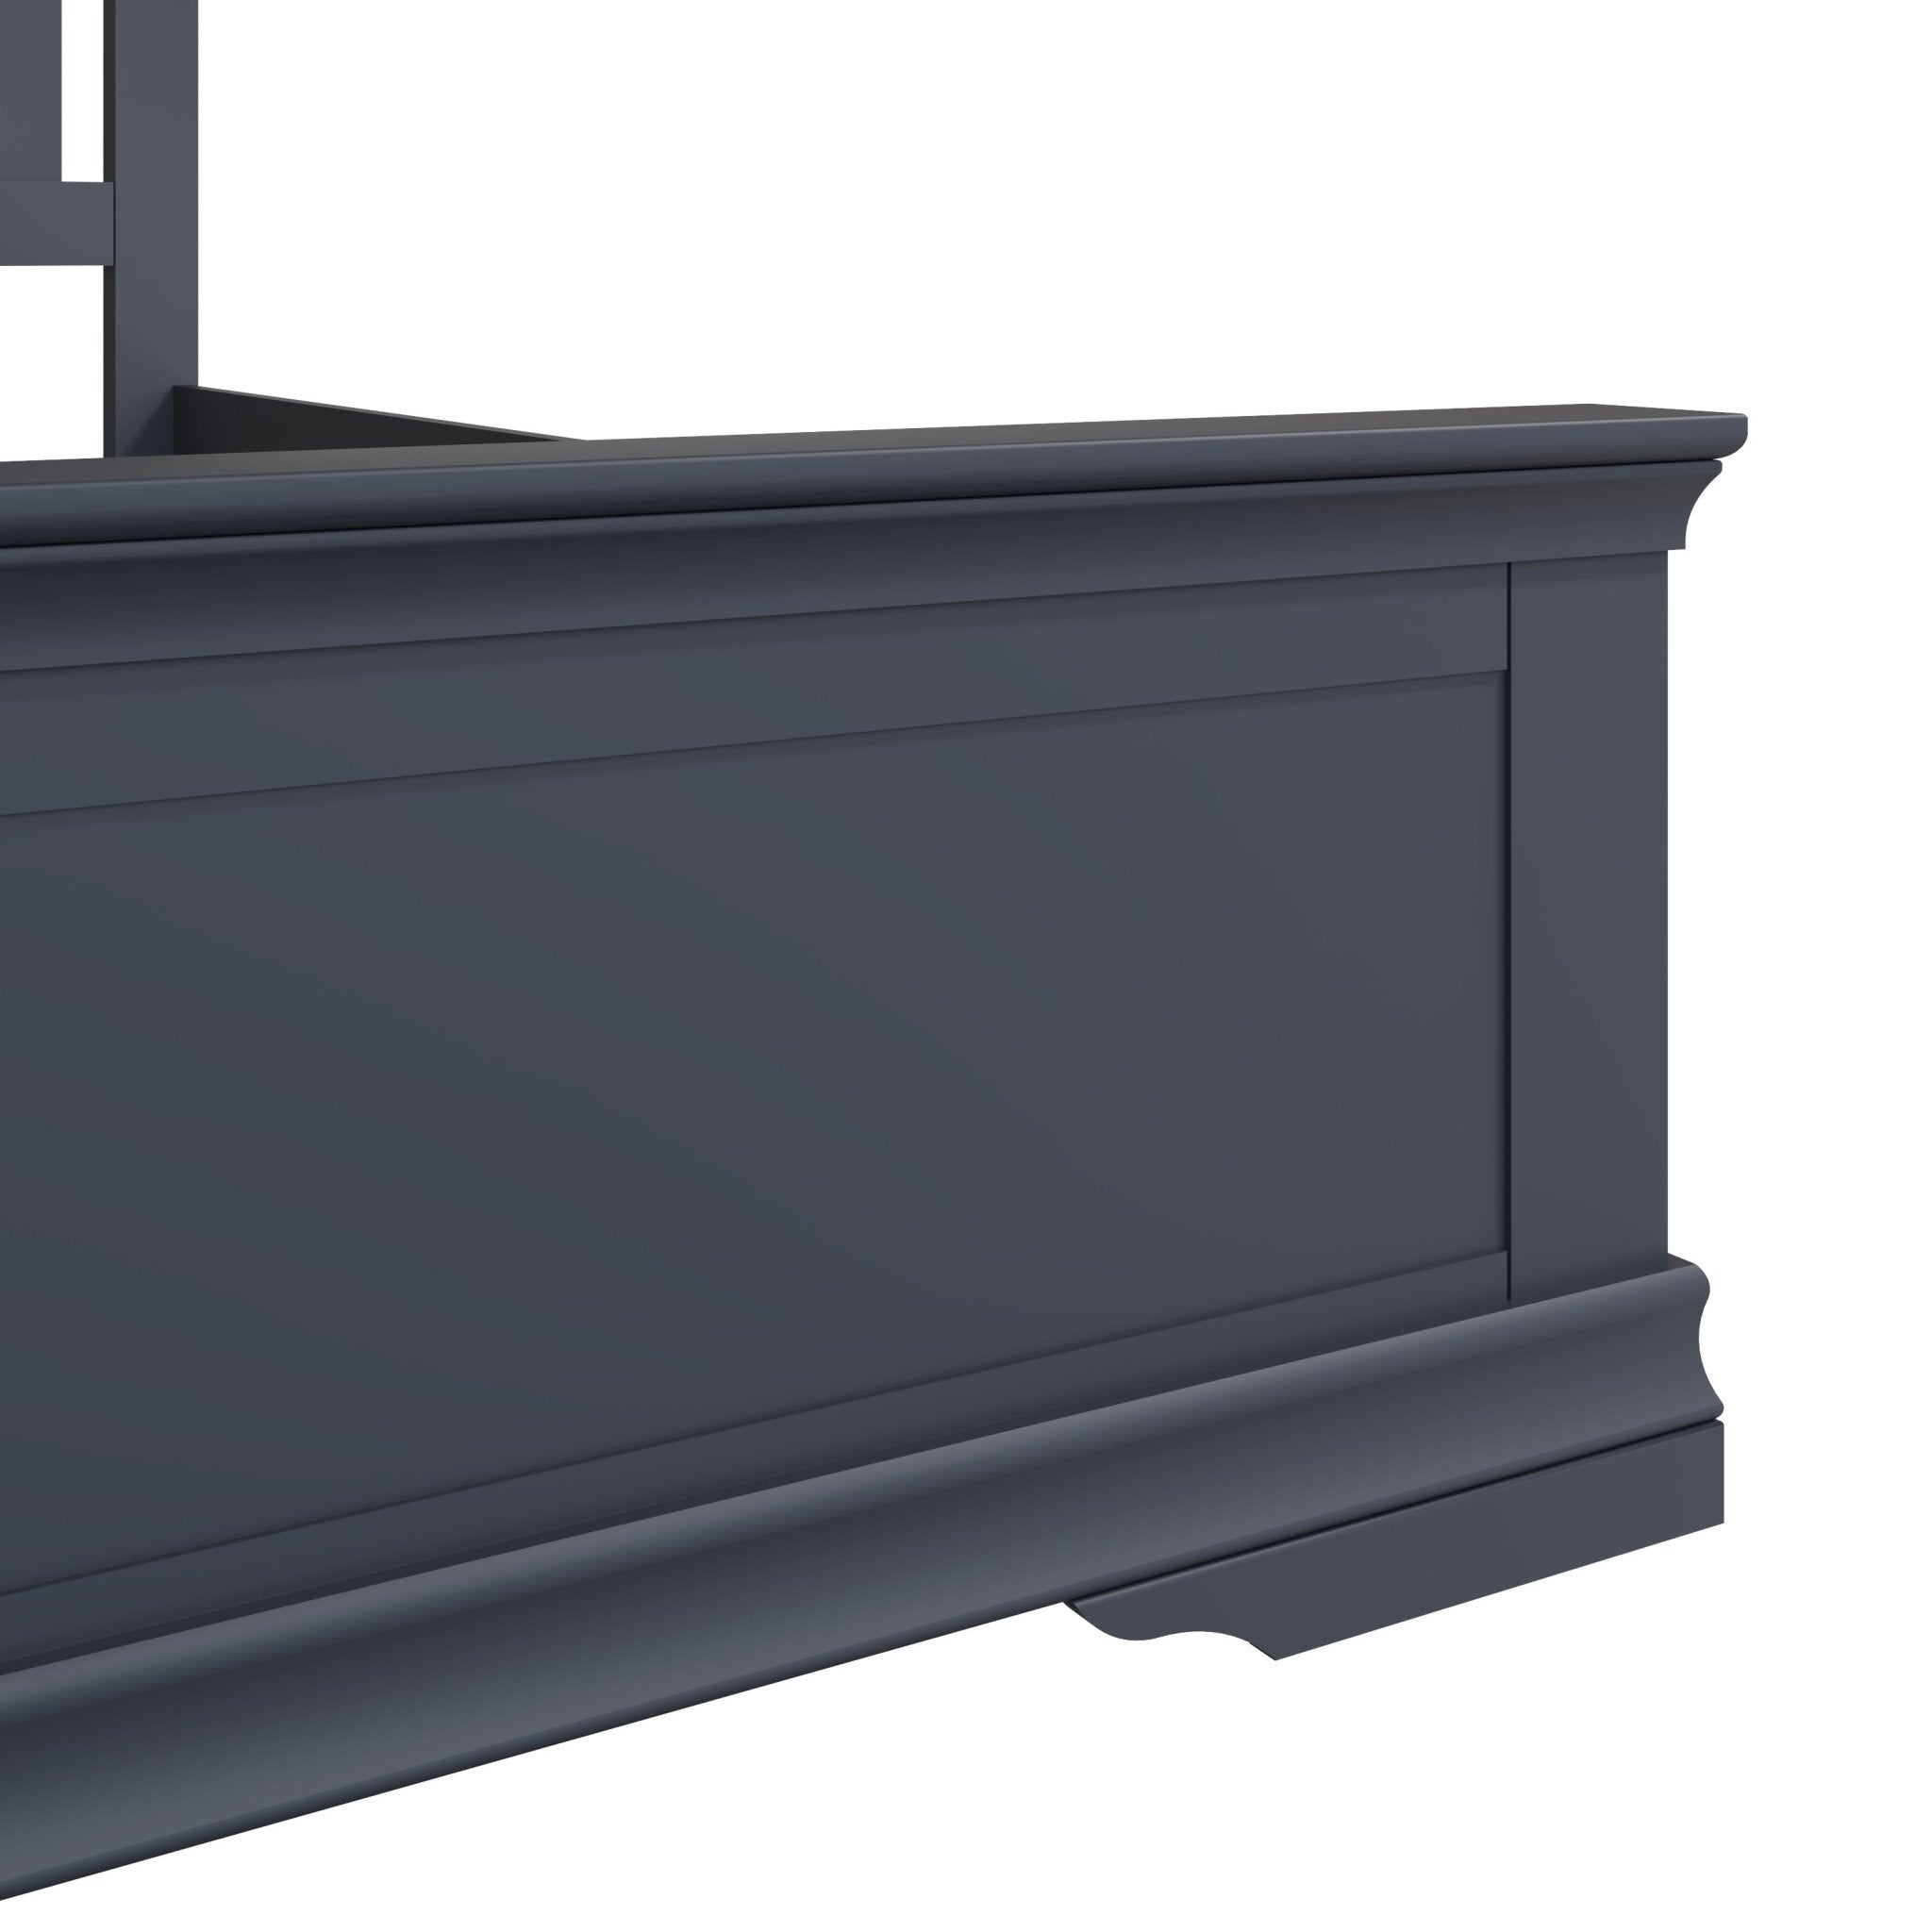 Boxgrove Midnight Grey Double Bed Frame 4ft 6" - Duck Barn Interiors